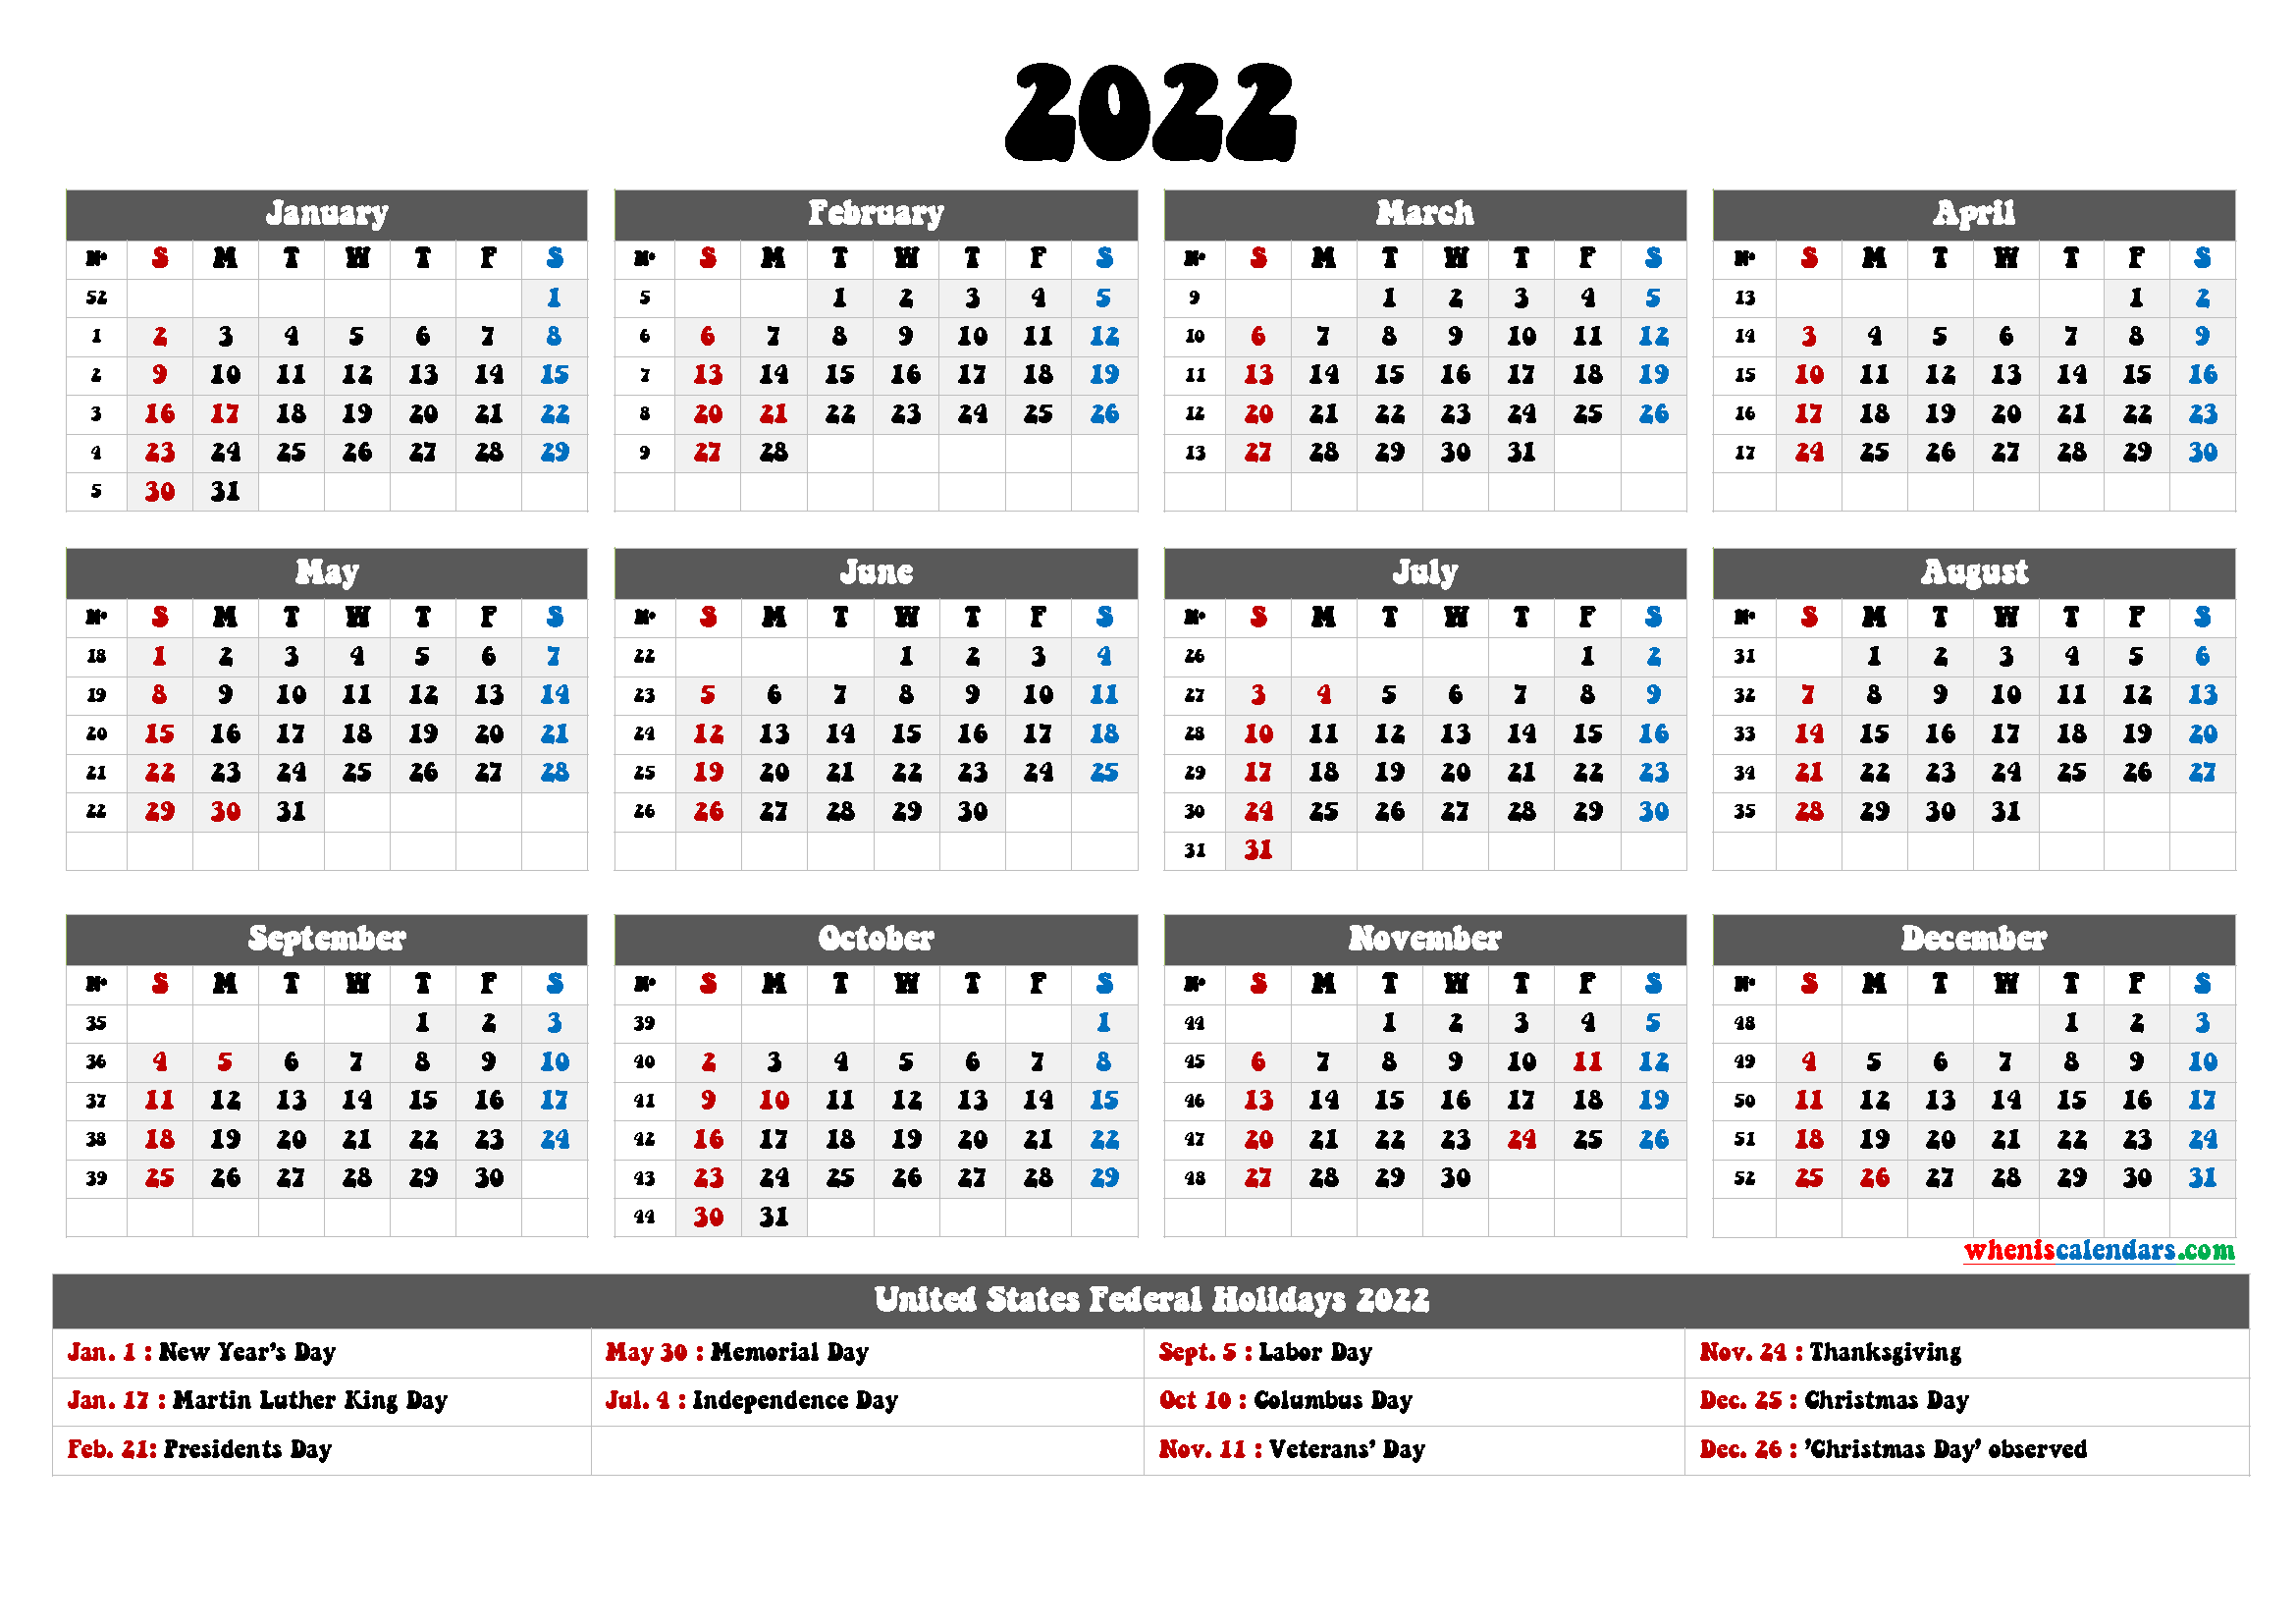 ud-calendar-2022-customize-and-print